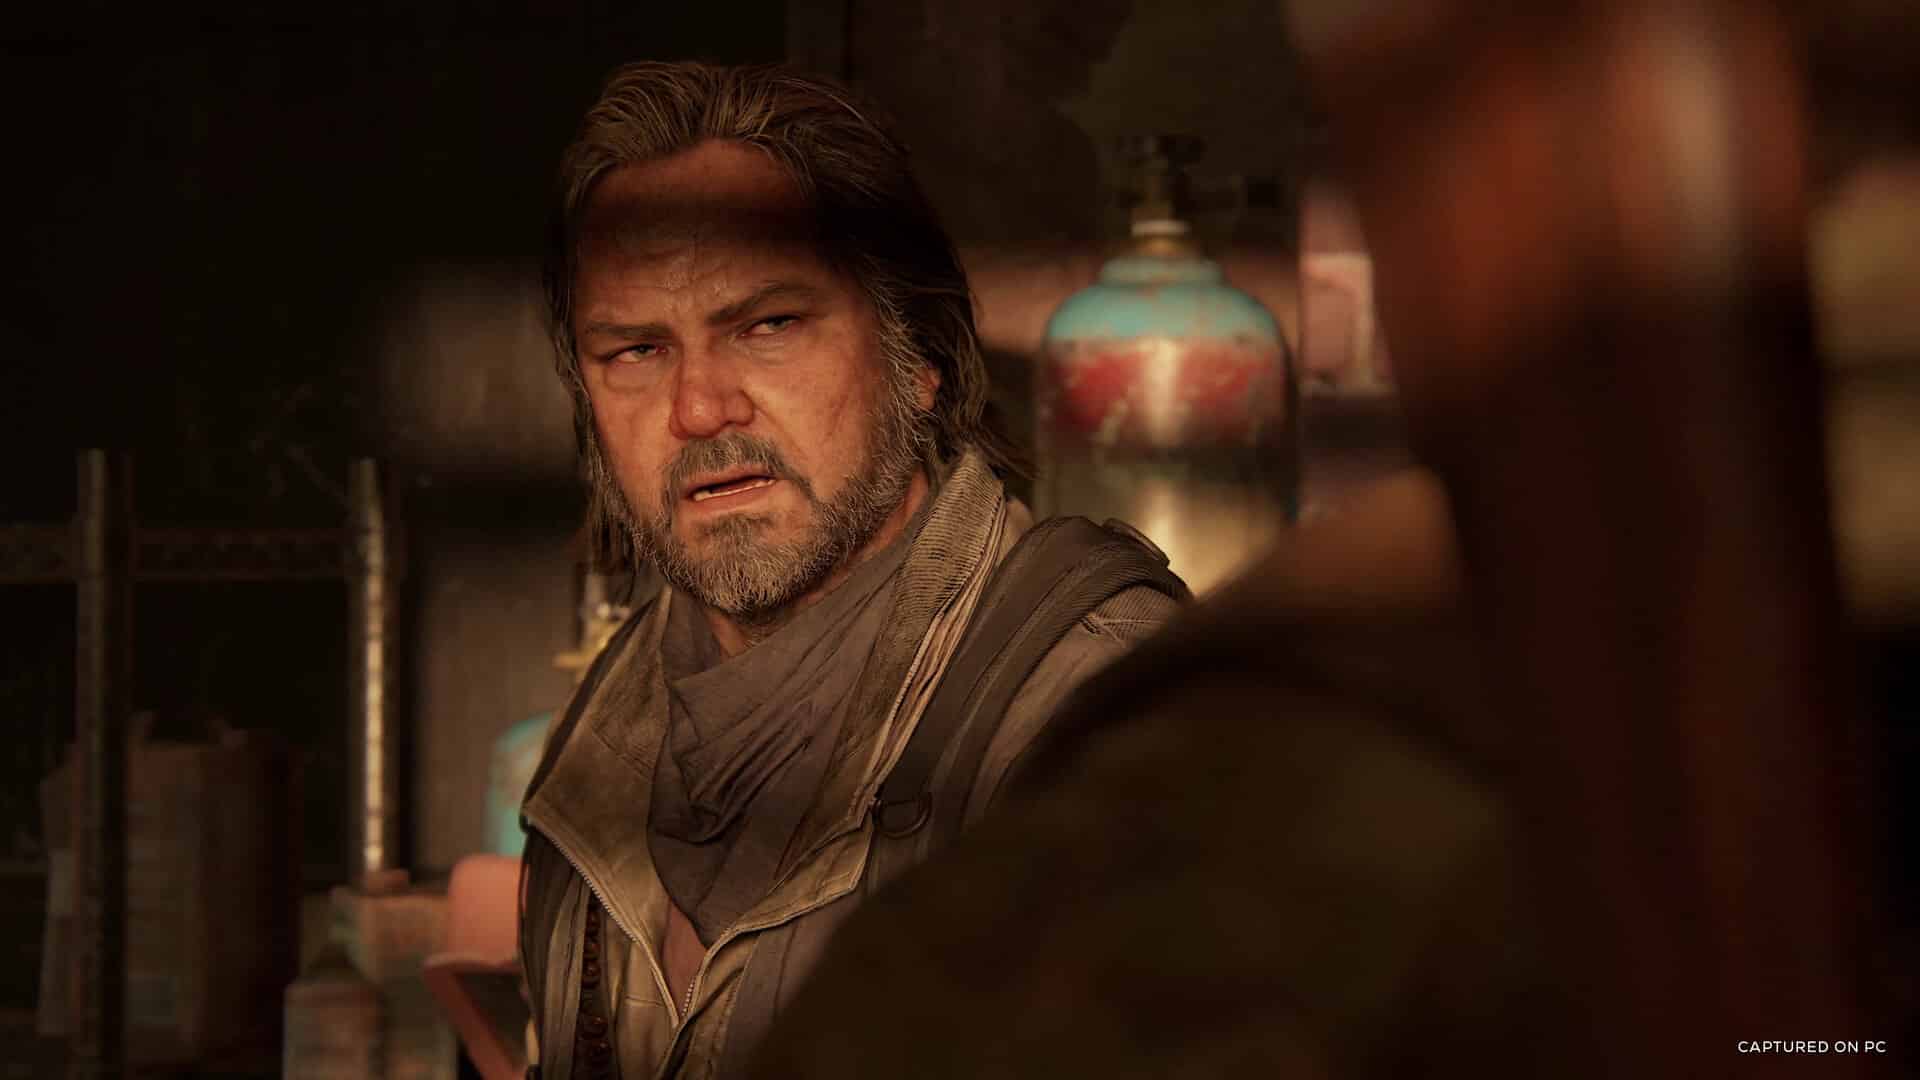 The Last of Us: Part I ontvangt nieuwe update op pc en is nu Steam